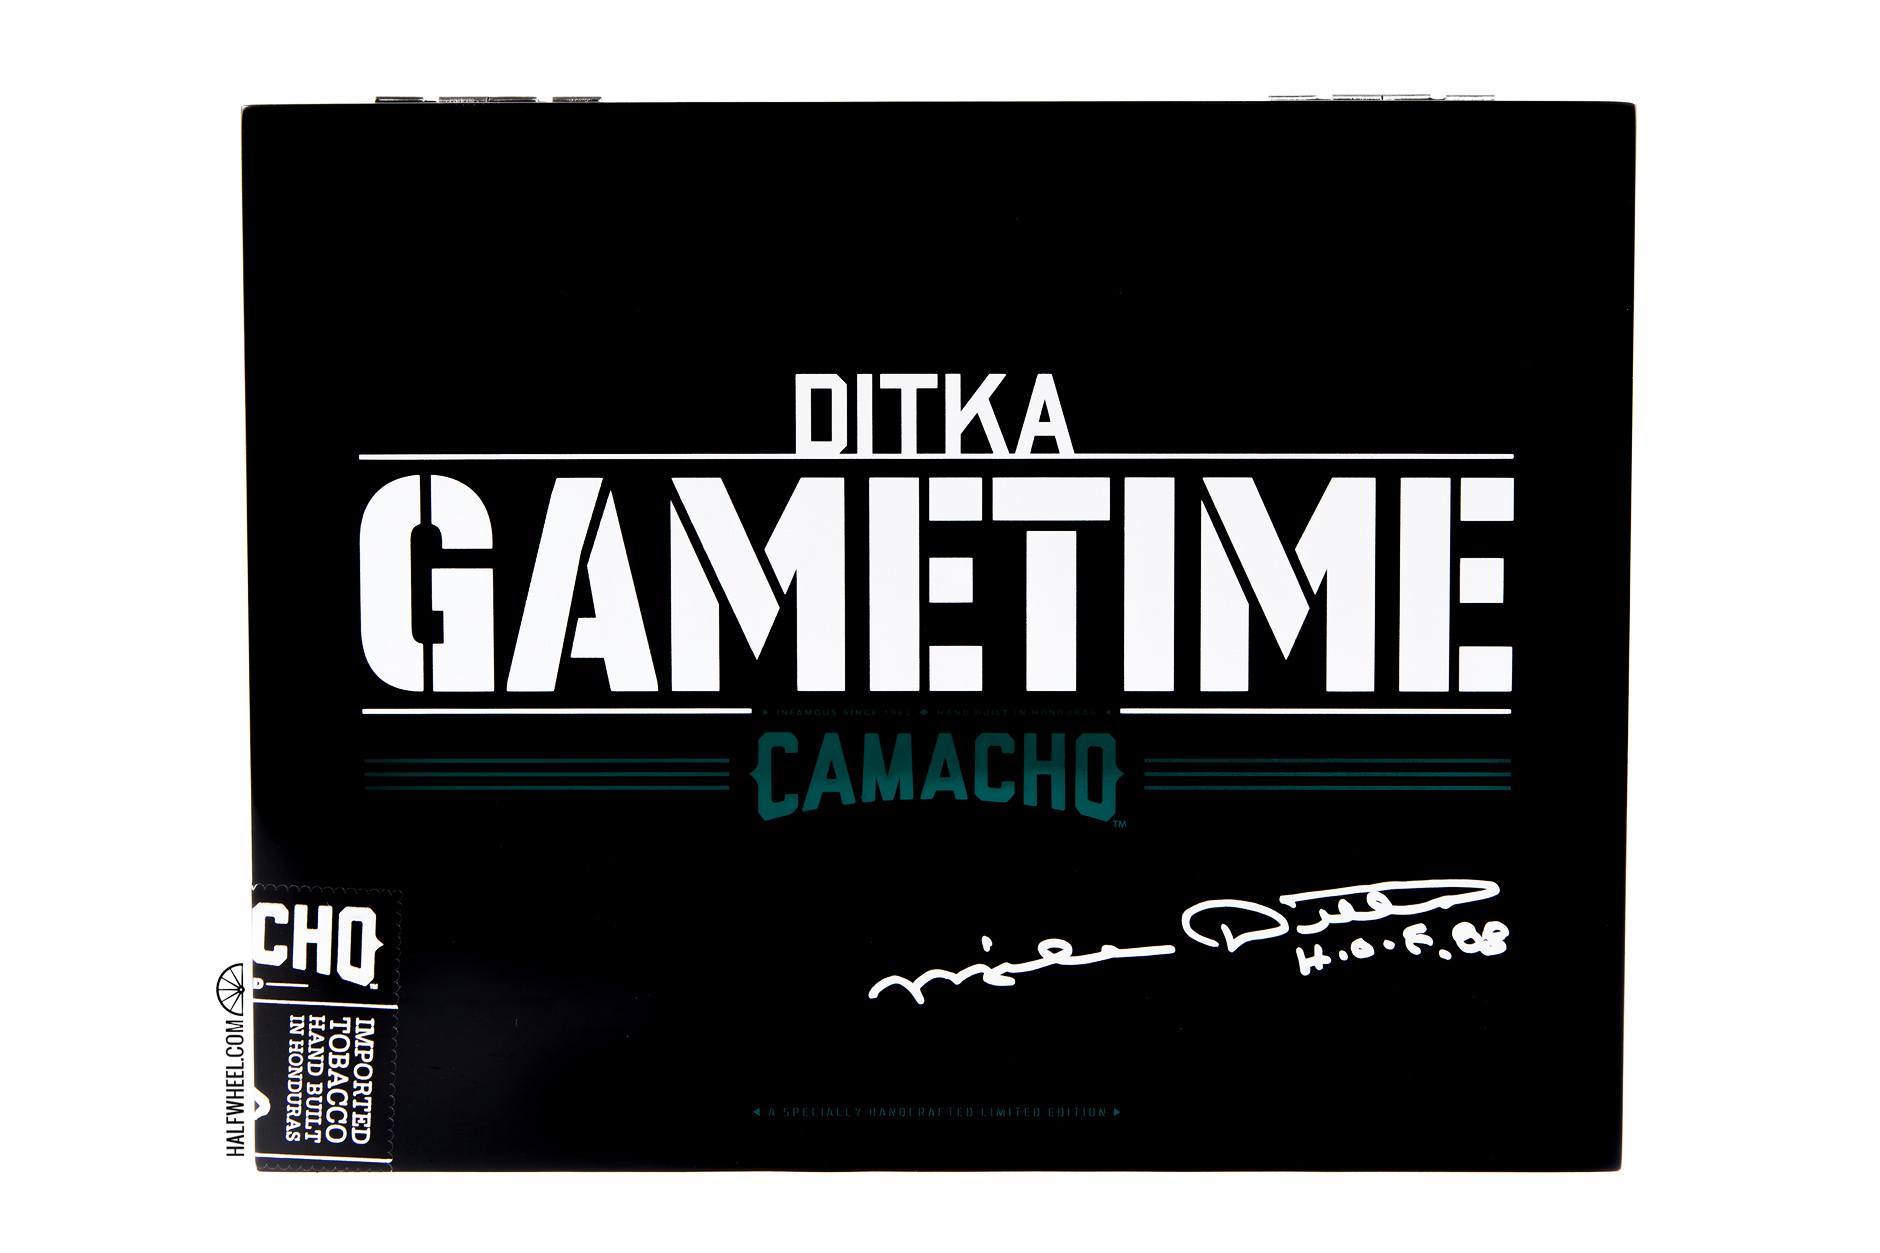 Ditka Gametime by Camacho Box 1